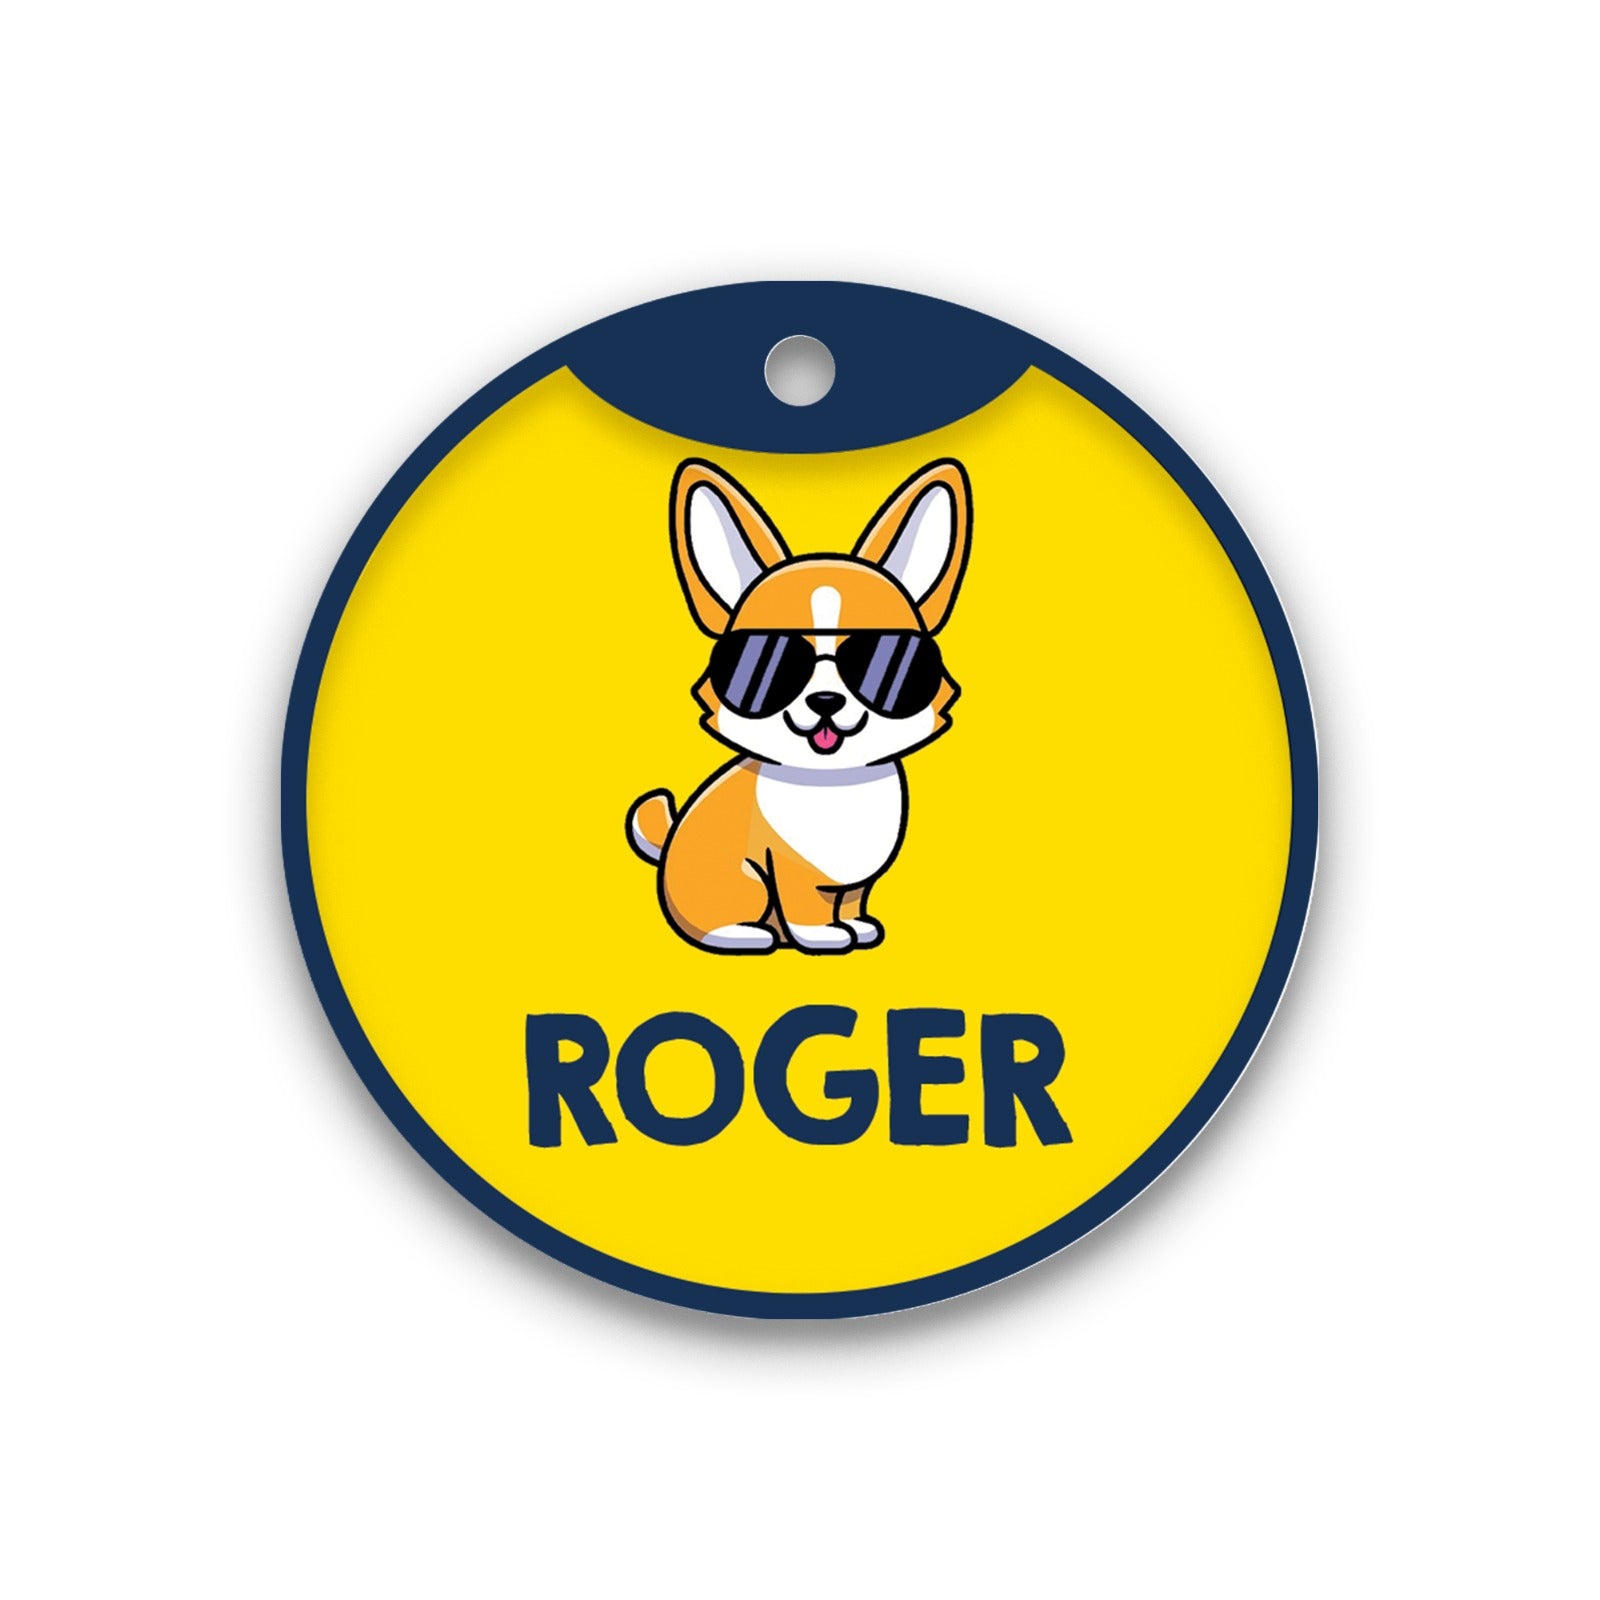 Customized Dog Id Tags - Cartoon Corgi Dog Wearing Glasses